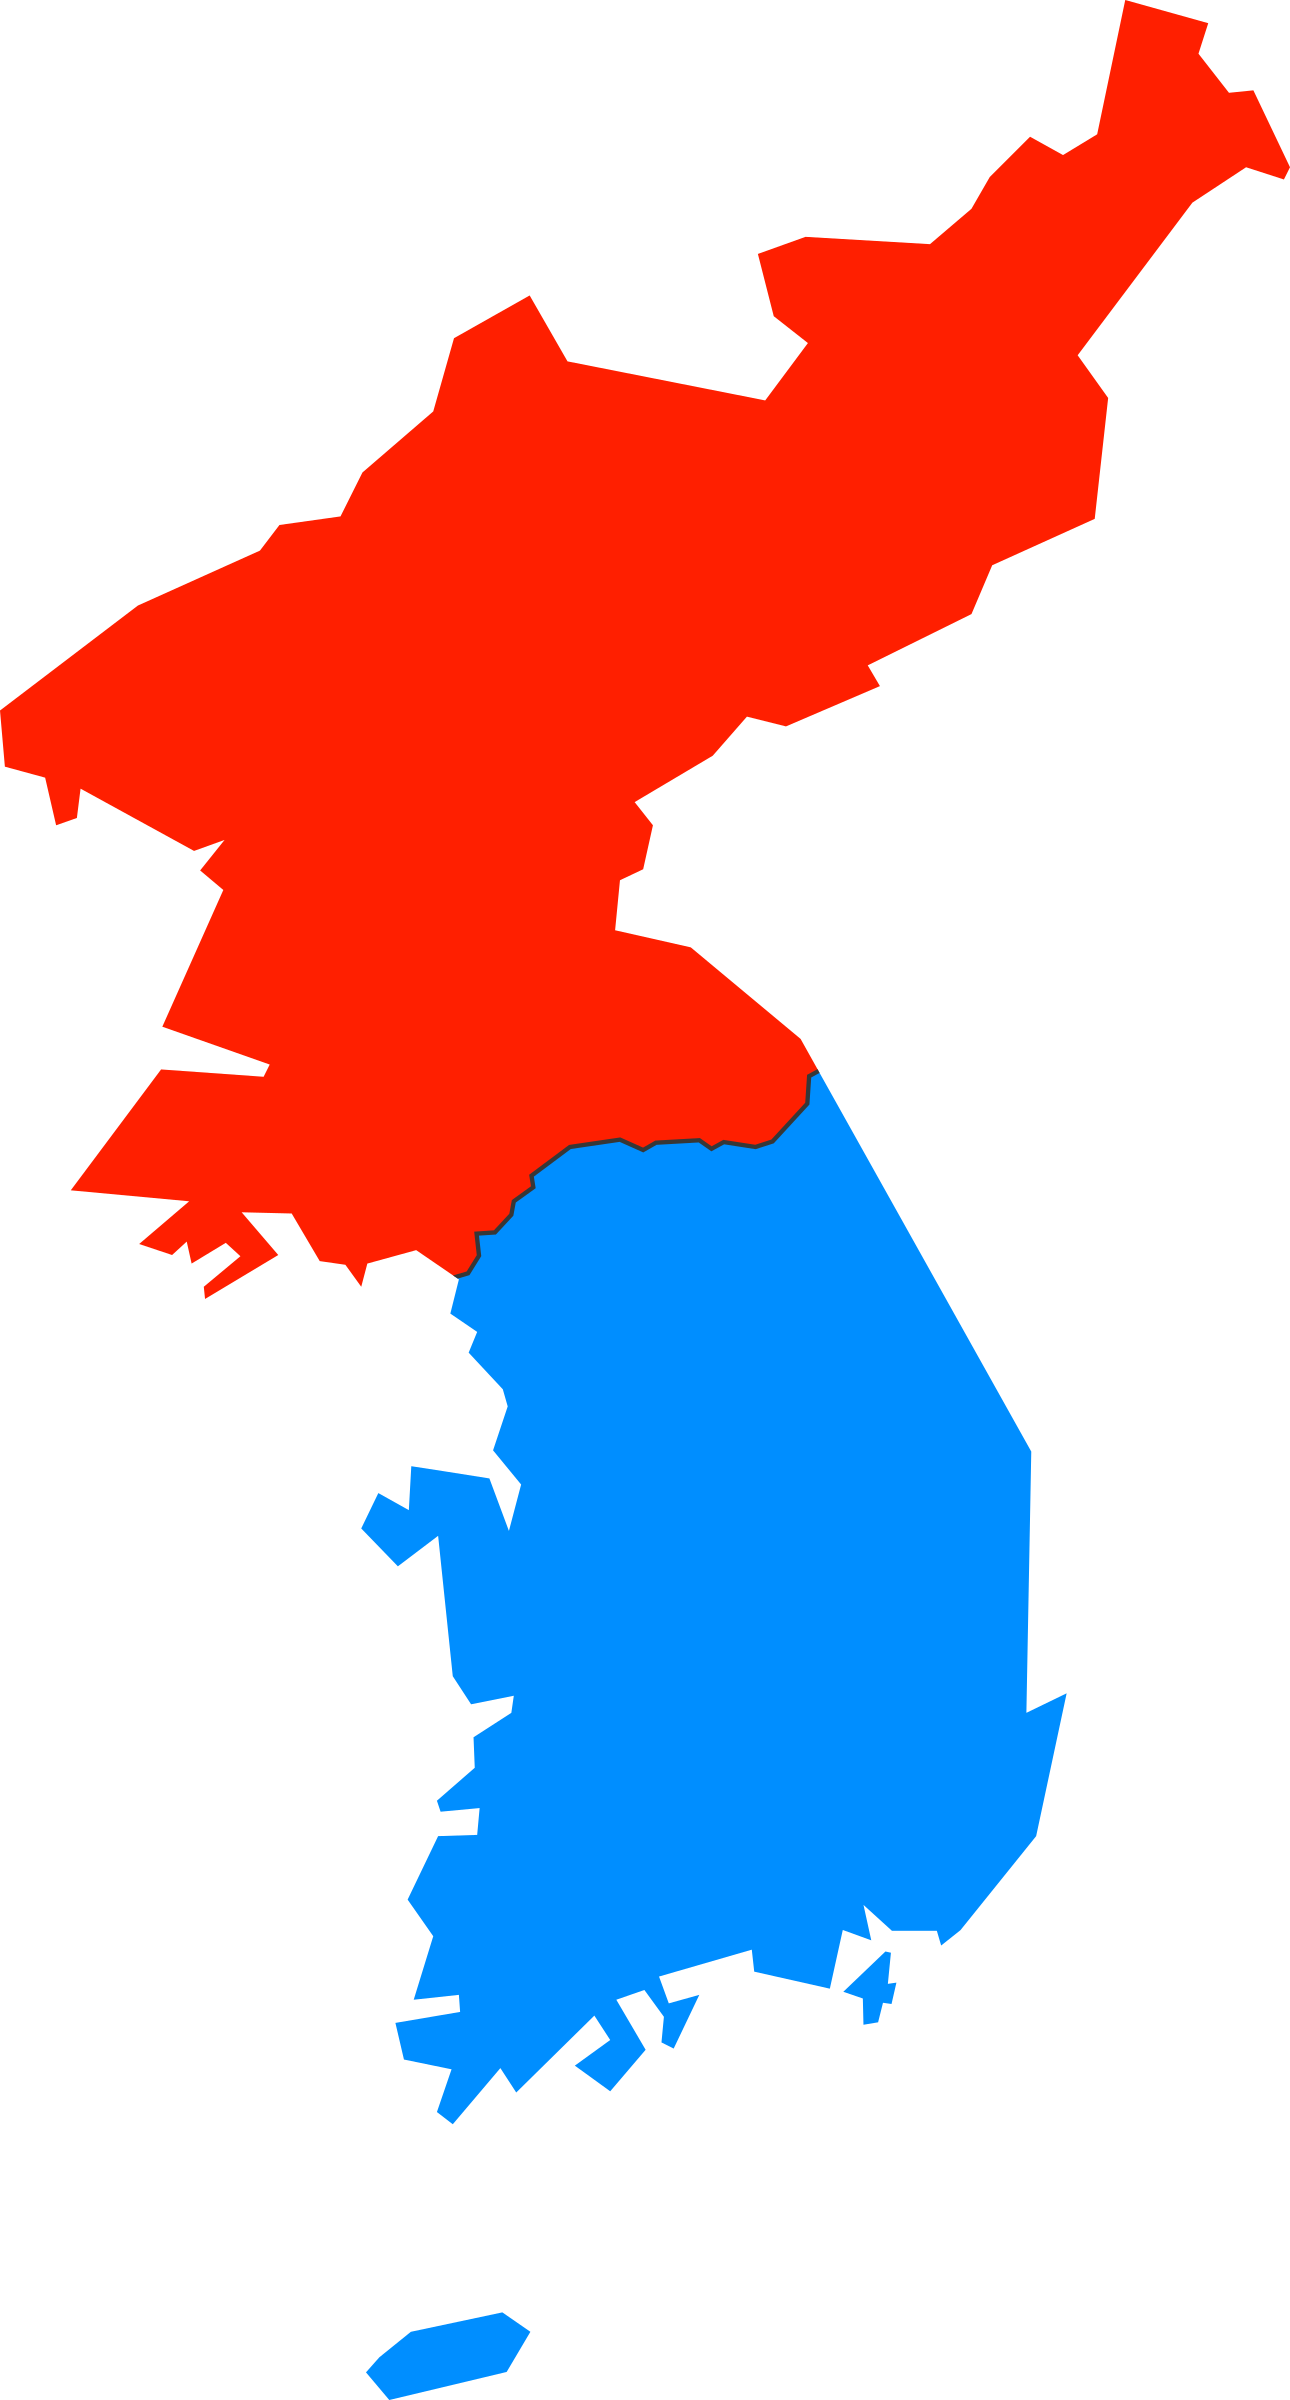 128x128 px, Republic Of Korea